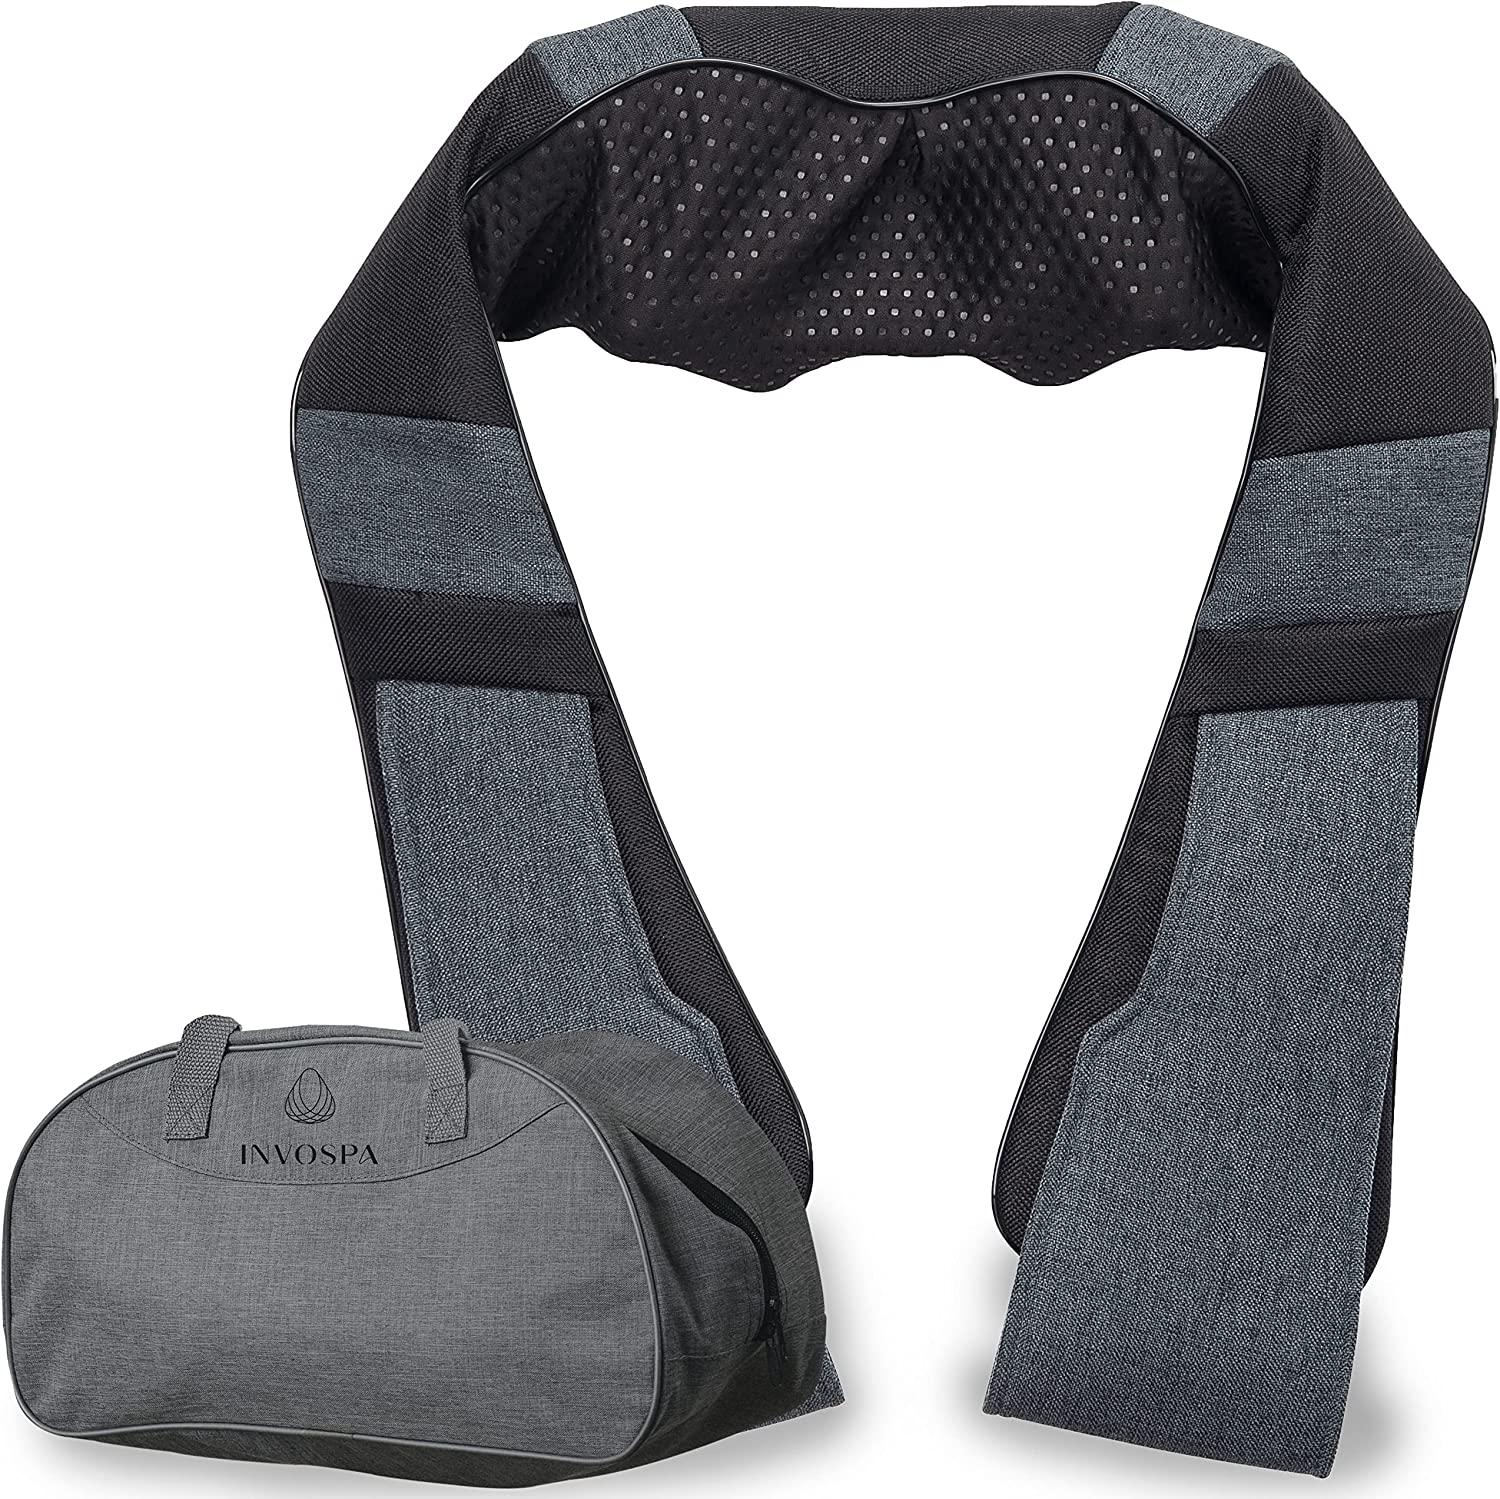 InvoSpa JC-779 Shiatsu Multipurpose Back Shoulder Neck Kneading Massager,  Grey